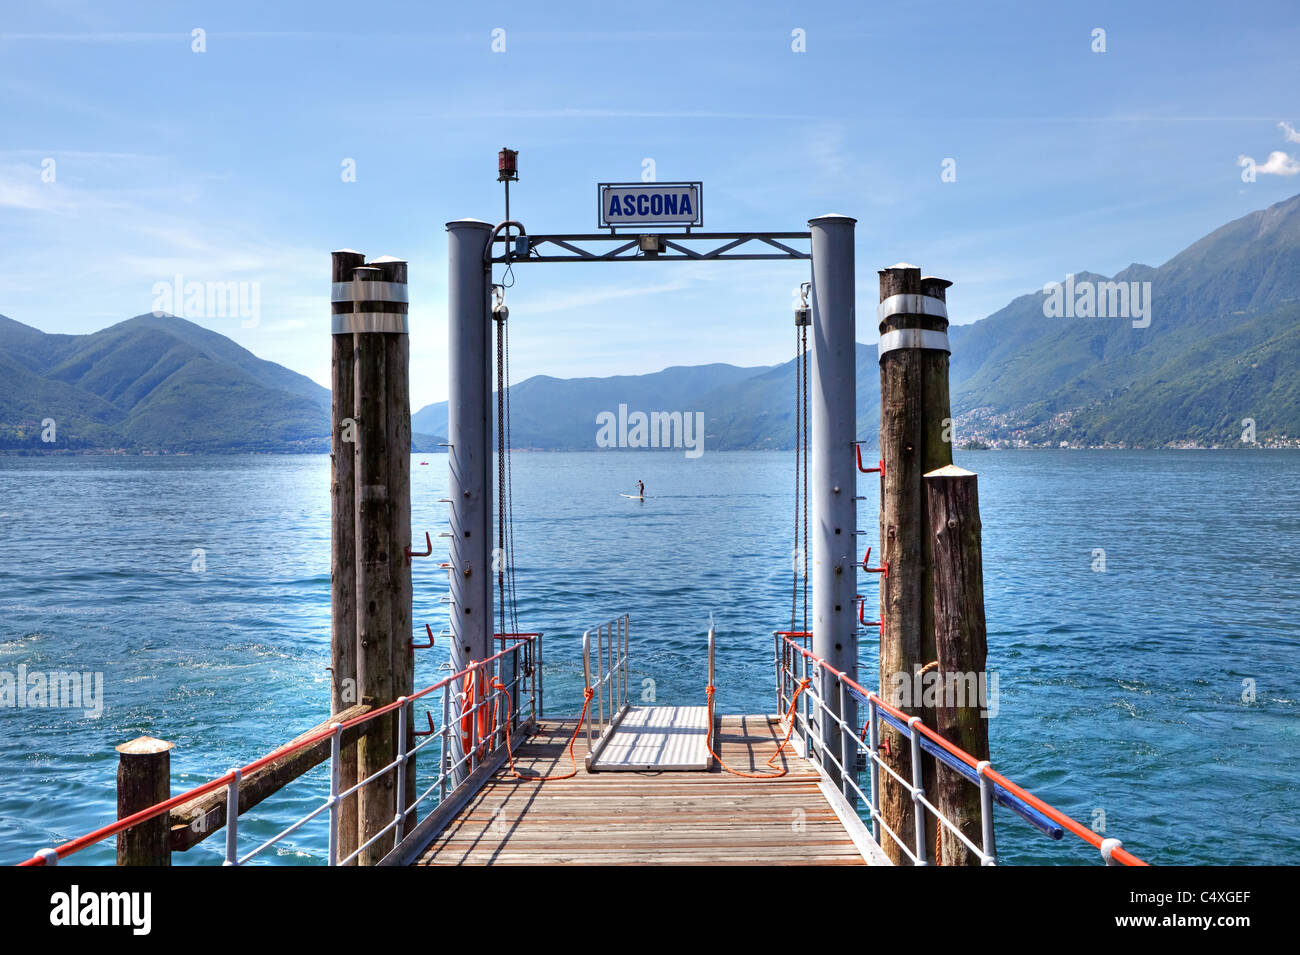 the jetty in Ascona - Ticino for trips on Lake Maggiore Stock Photo